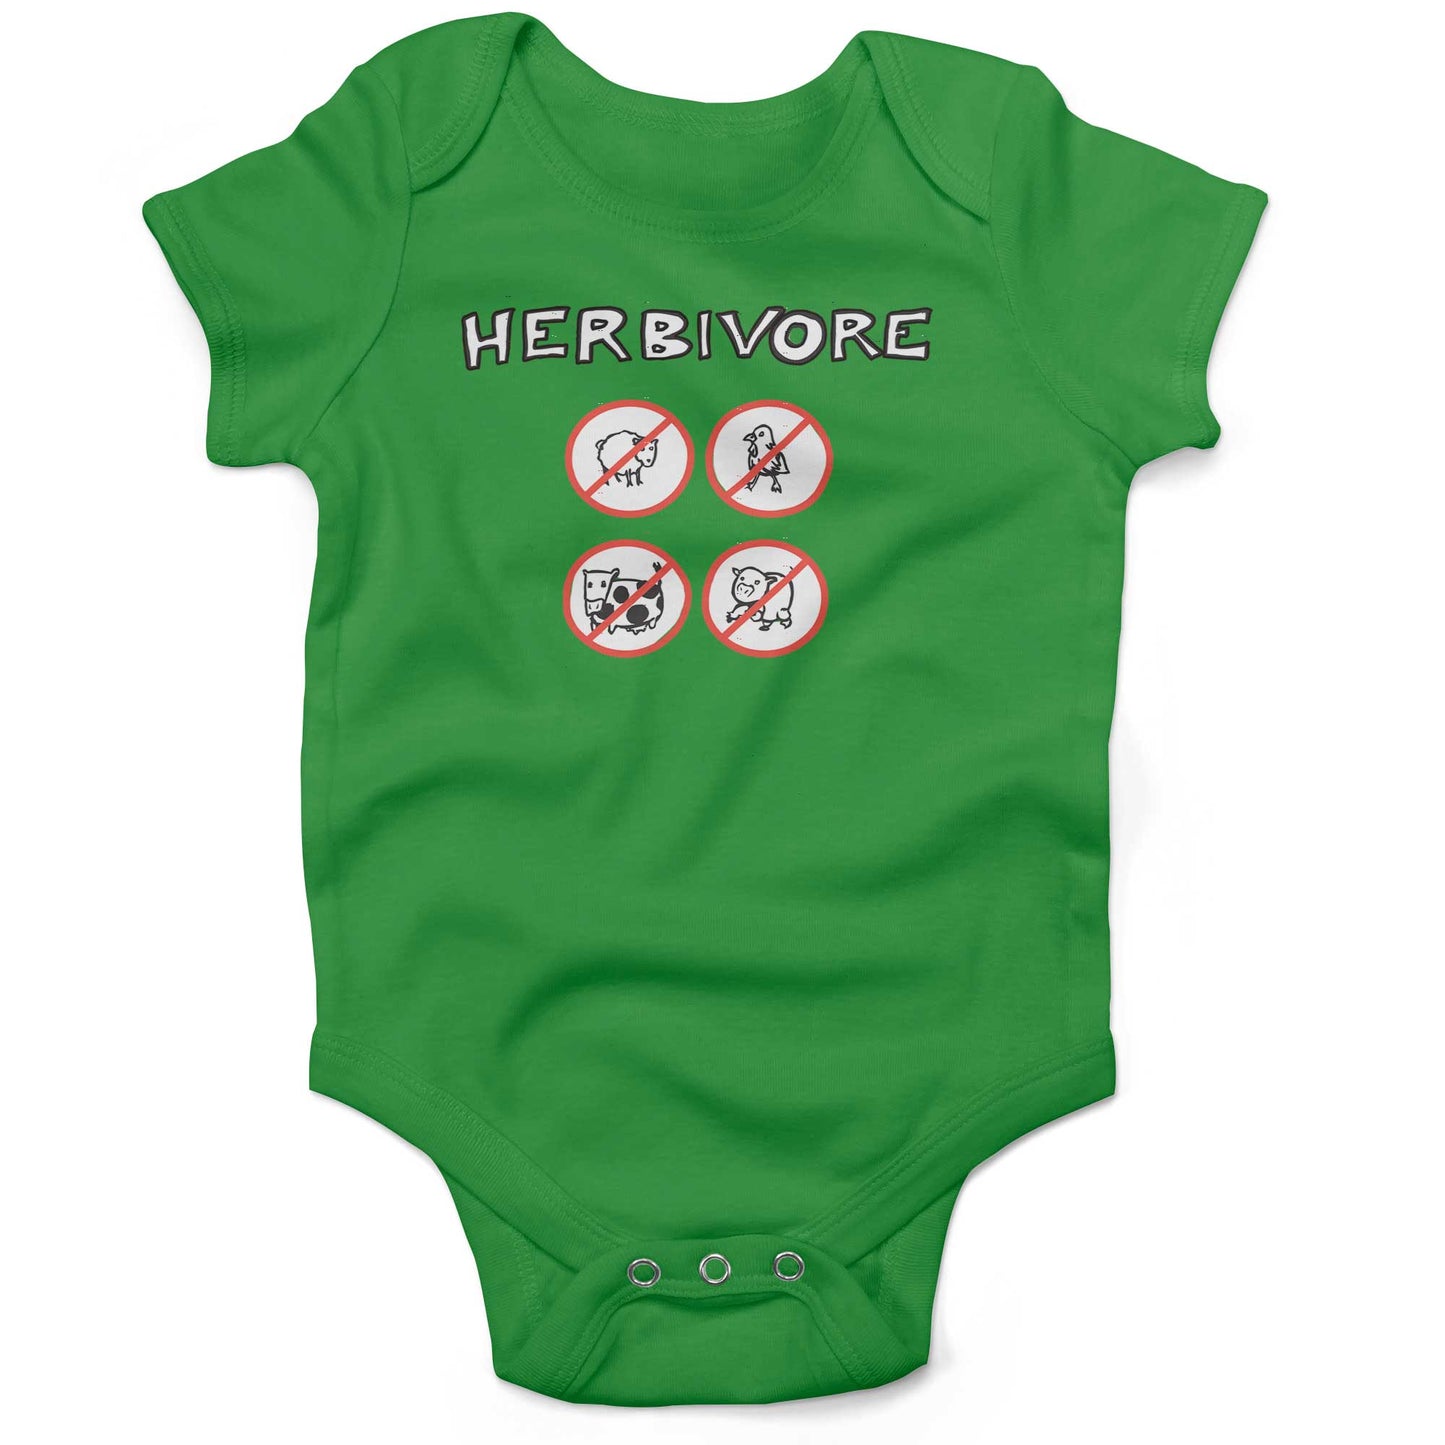 Herbivore Infant Bodysuit or Raglan Tee-Grass Green-3-6 months